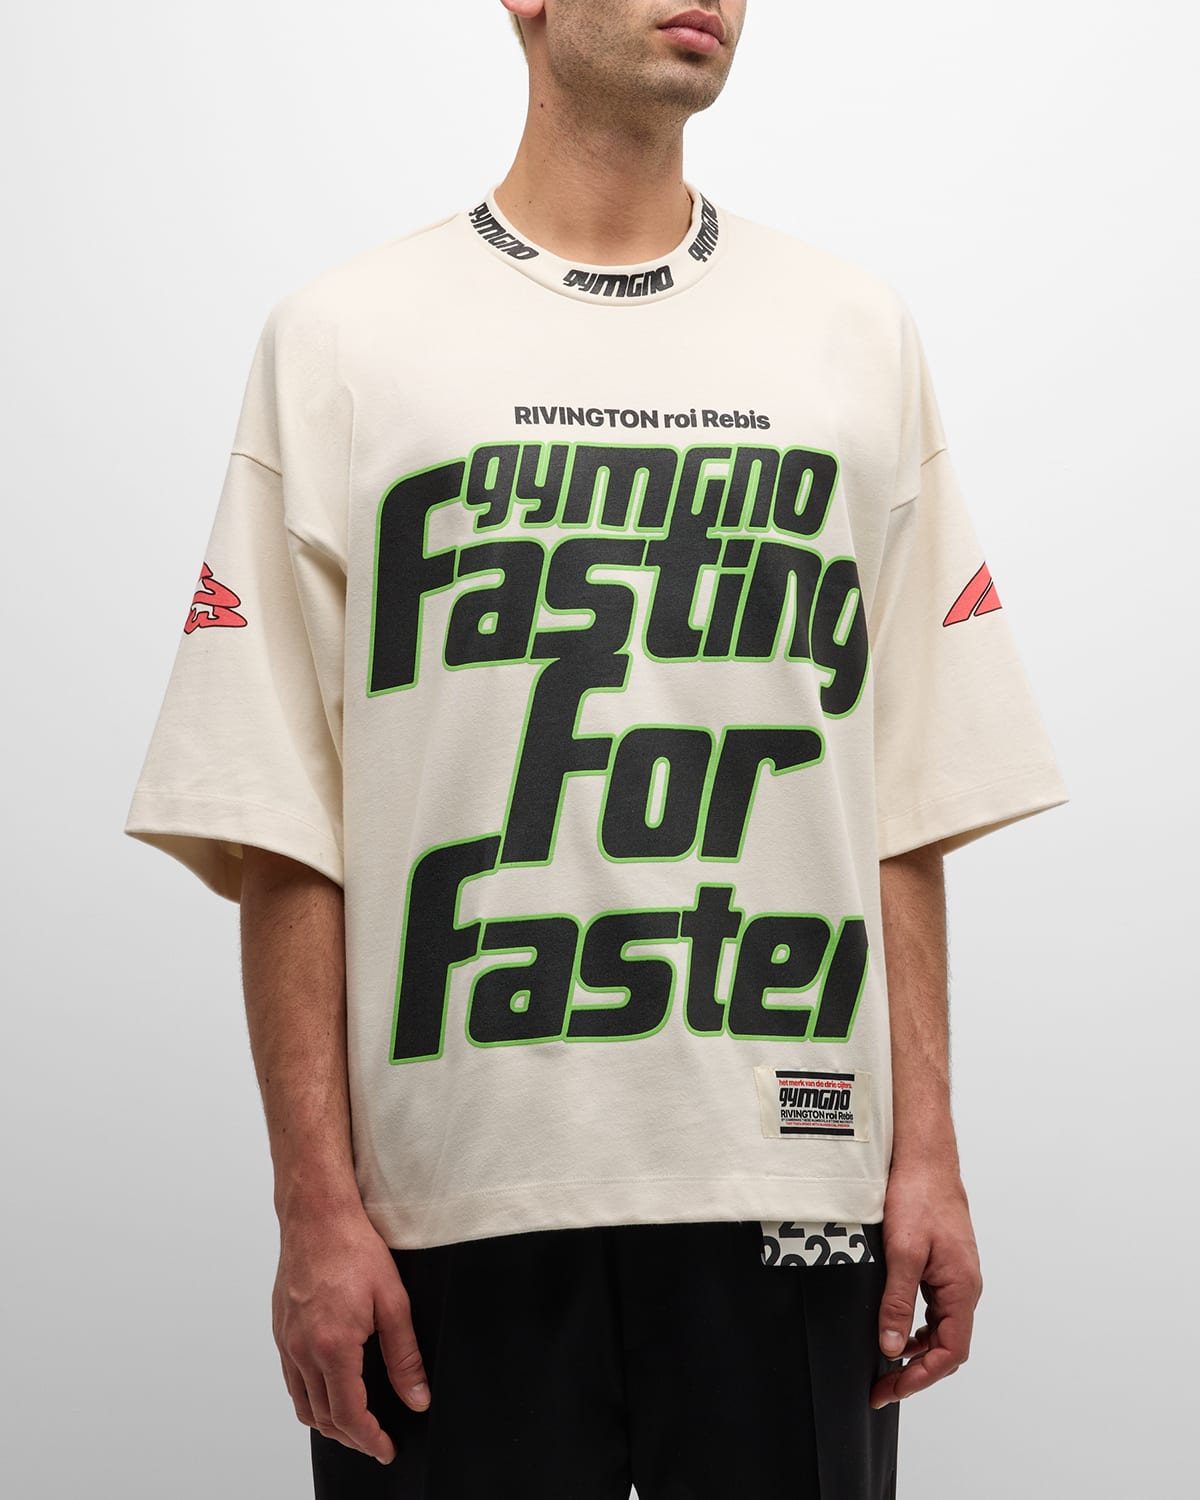 Rivington Roi Rebis Men's Fasting For Faster Short-sleeve T-shirt In Vintage Black